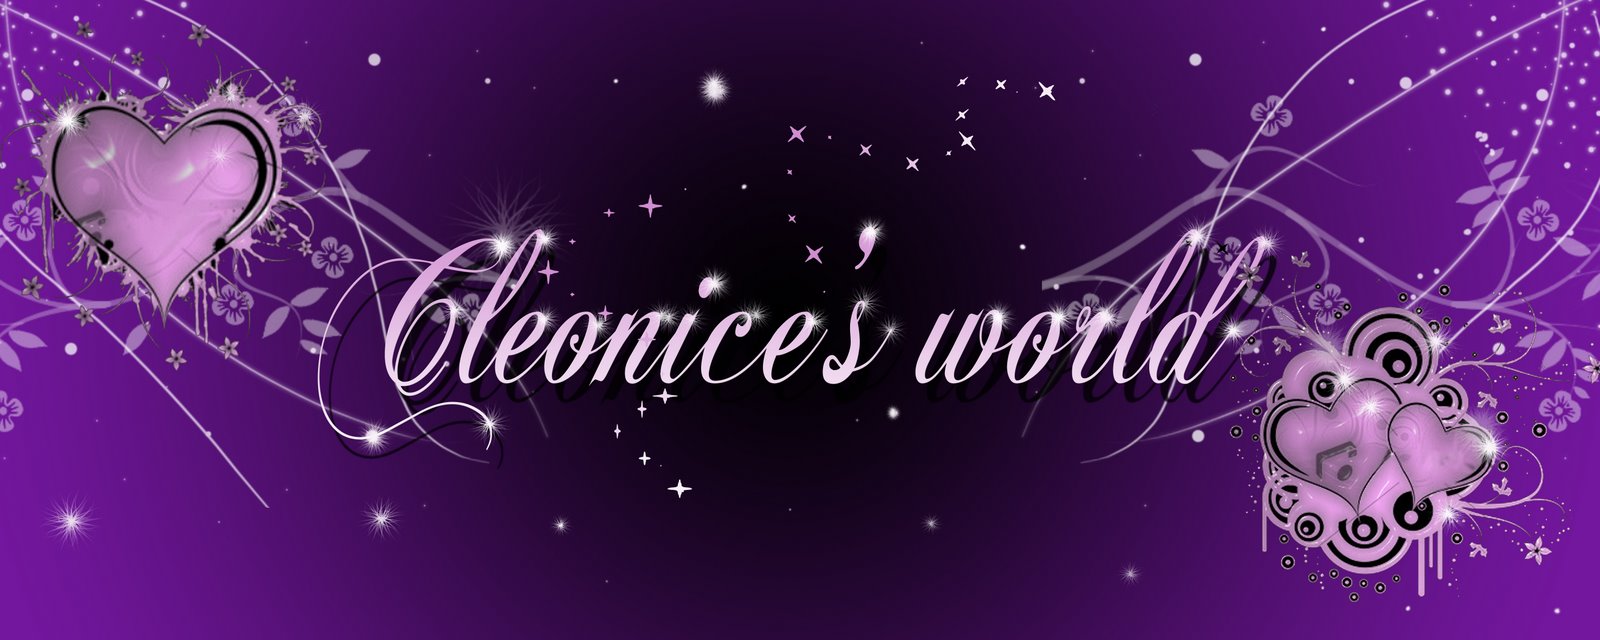 Cleonice's World